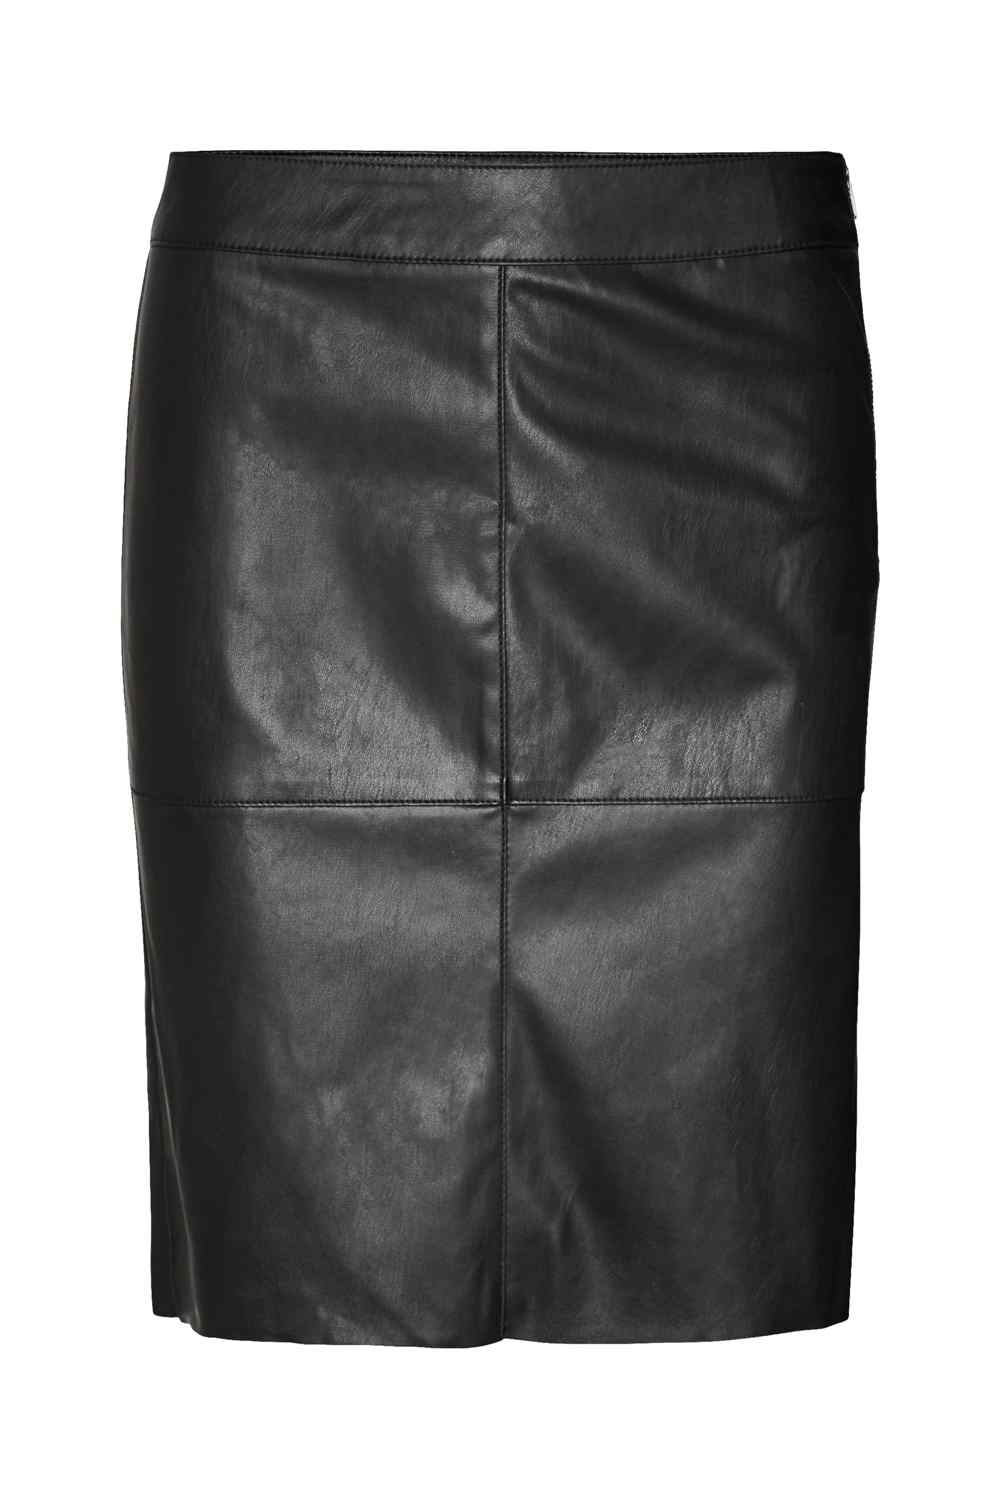 Vero Moda Olympia Skirt - Black 5 Shaws Department Stores